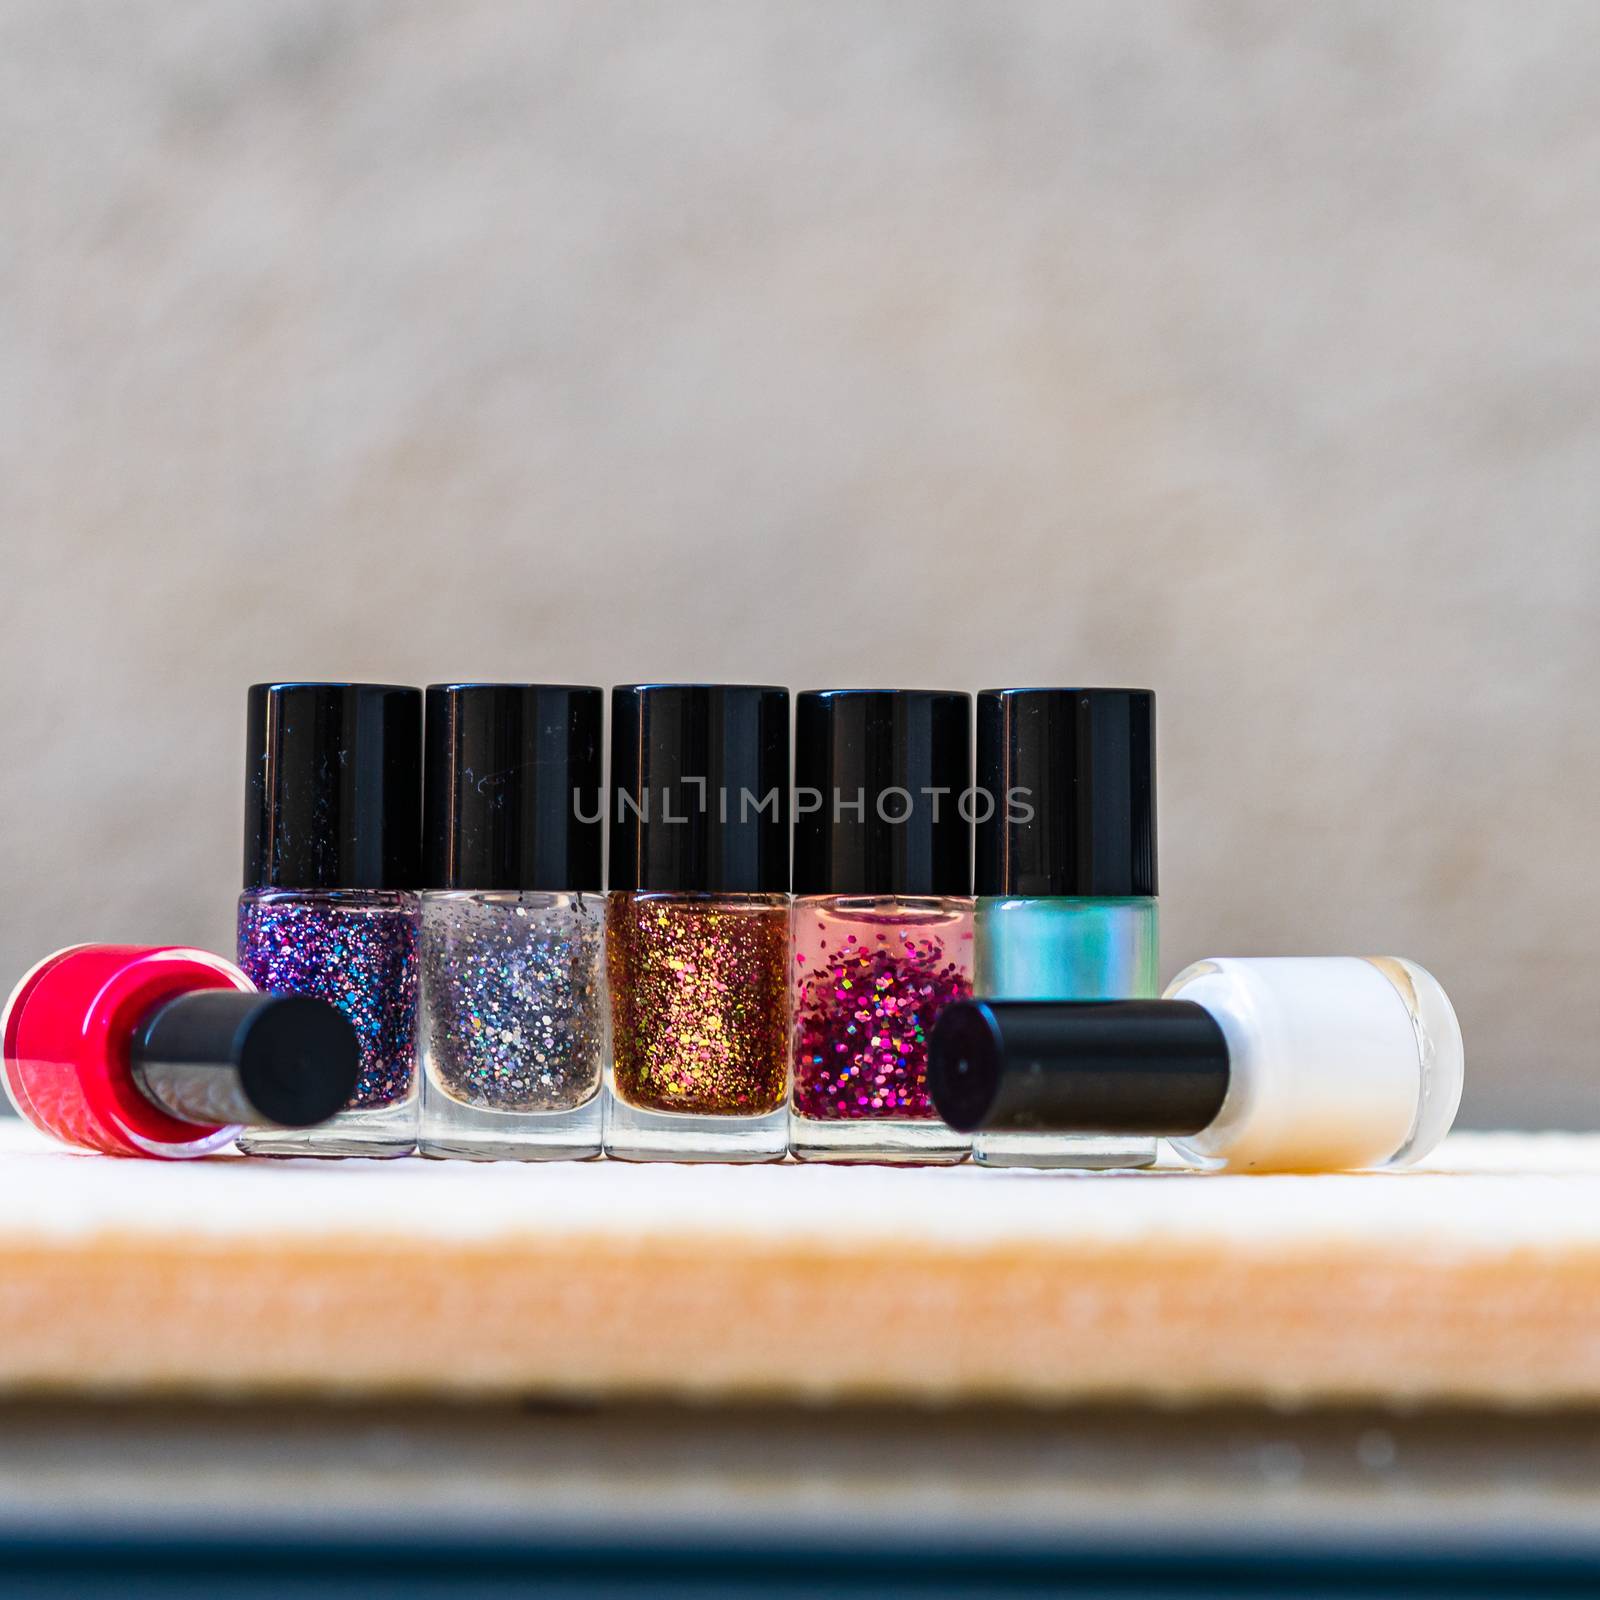 Close up photo of colorful, bright and glittery nail polish bott by vladispas